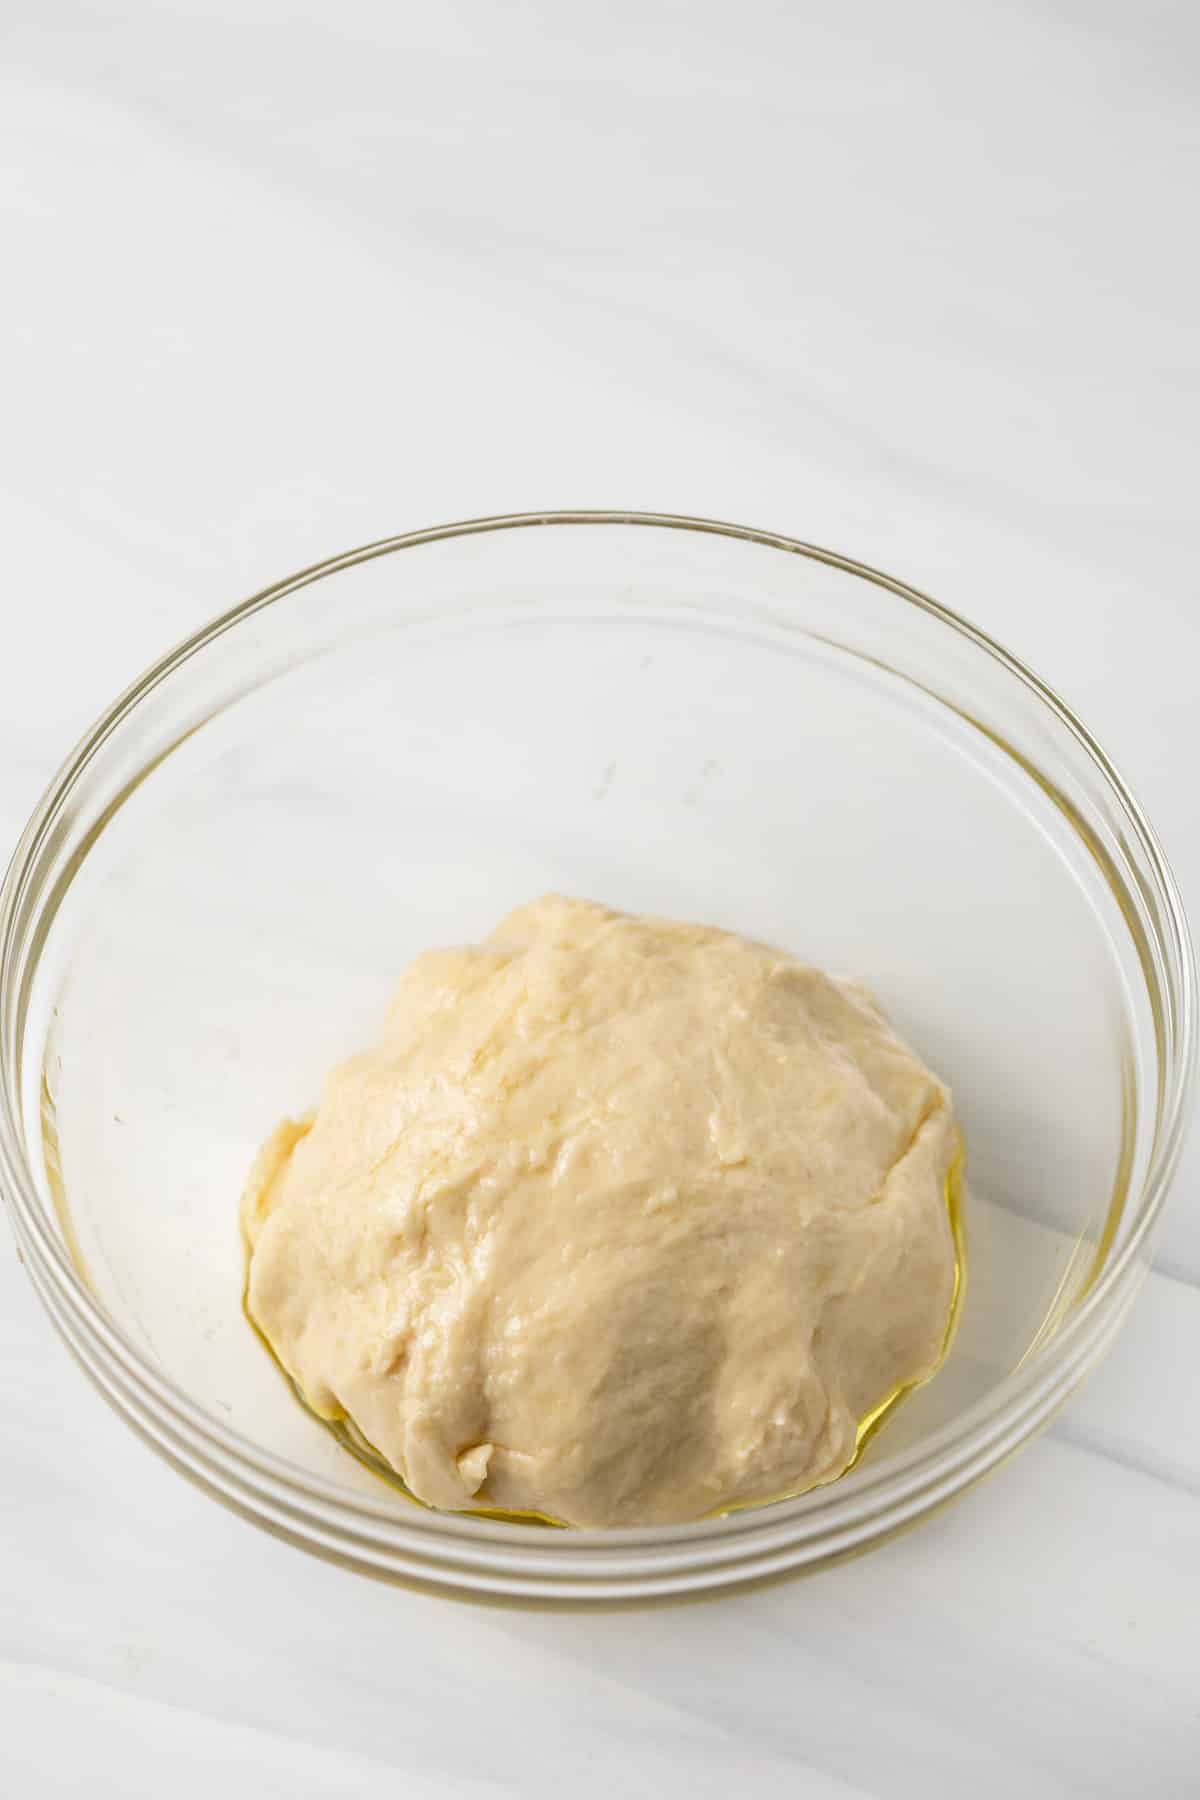 Strudel dough in a glass bowl.